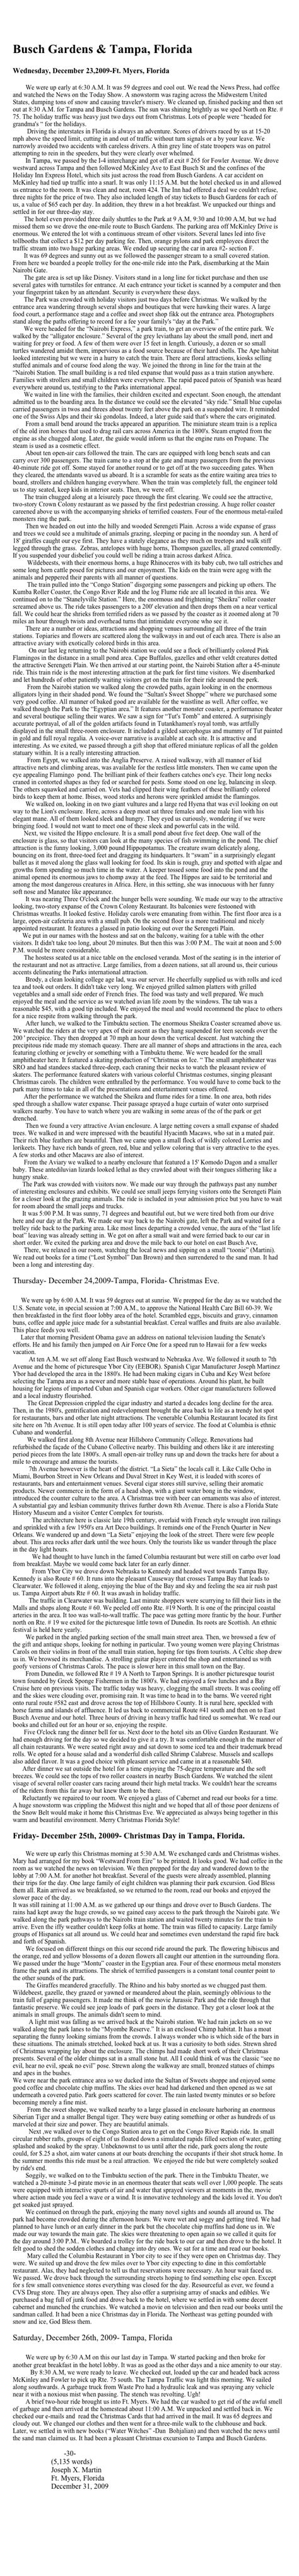 Home Busch Gardens And Tampa Florida Wednesday December 23